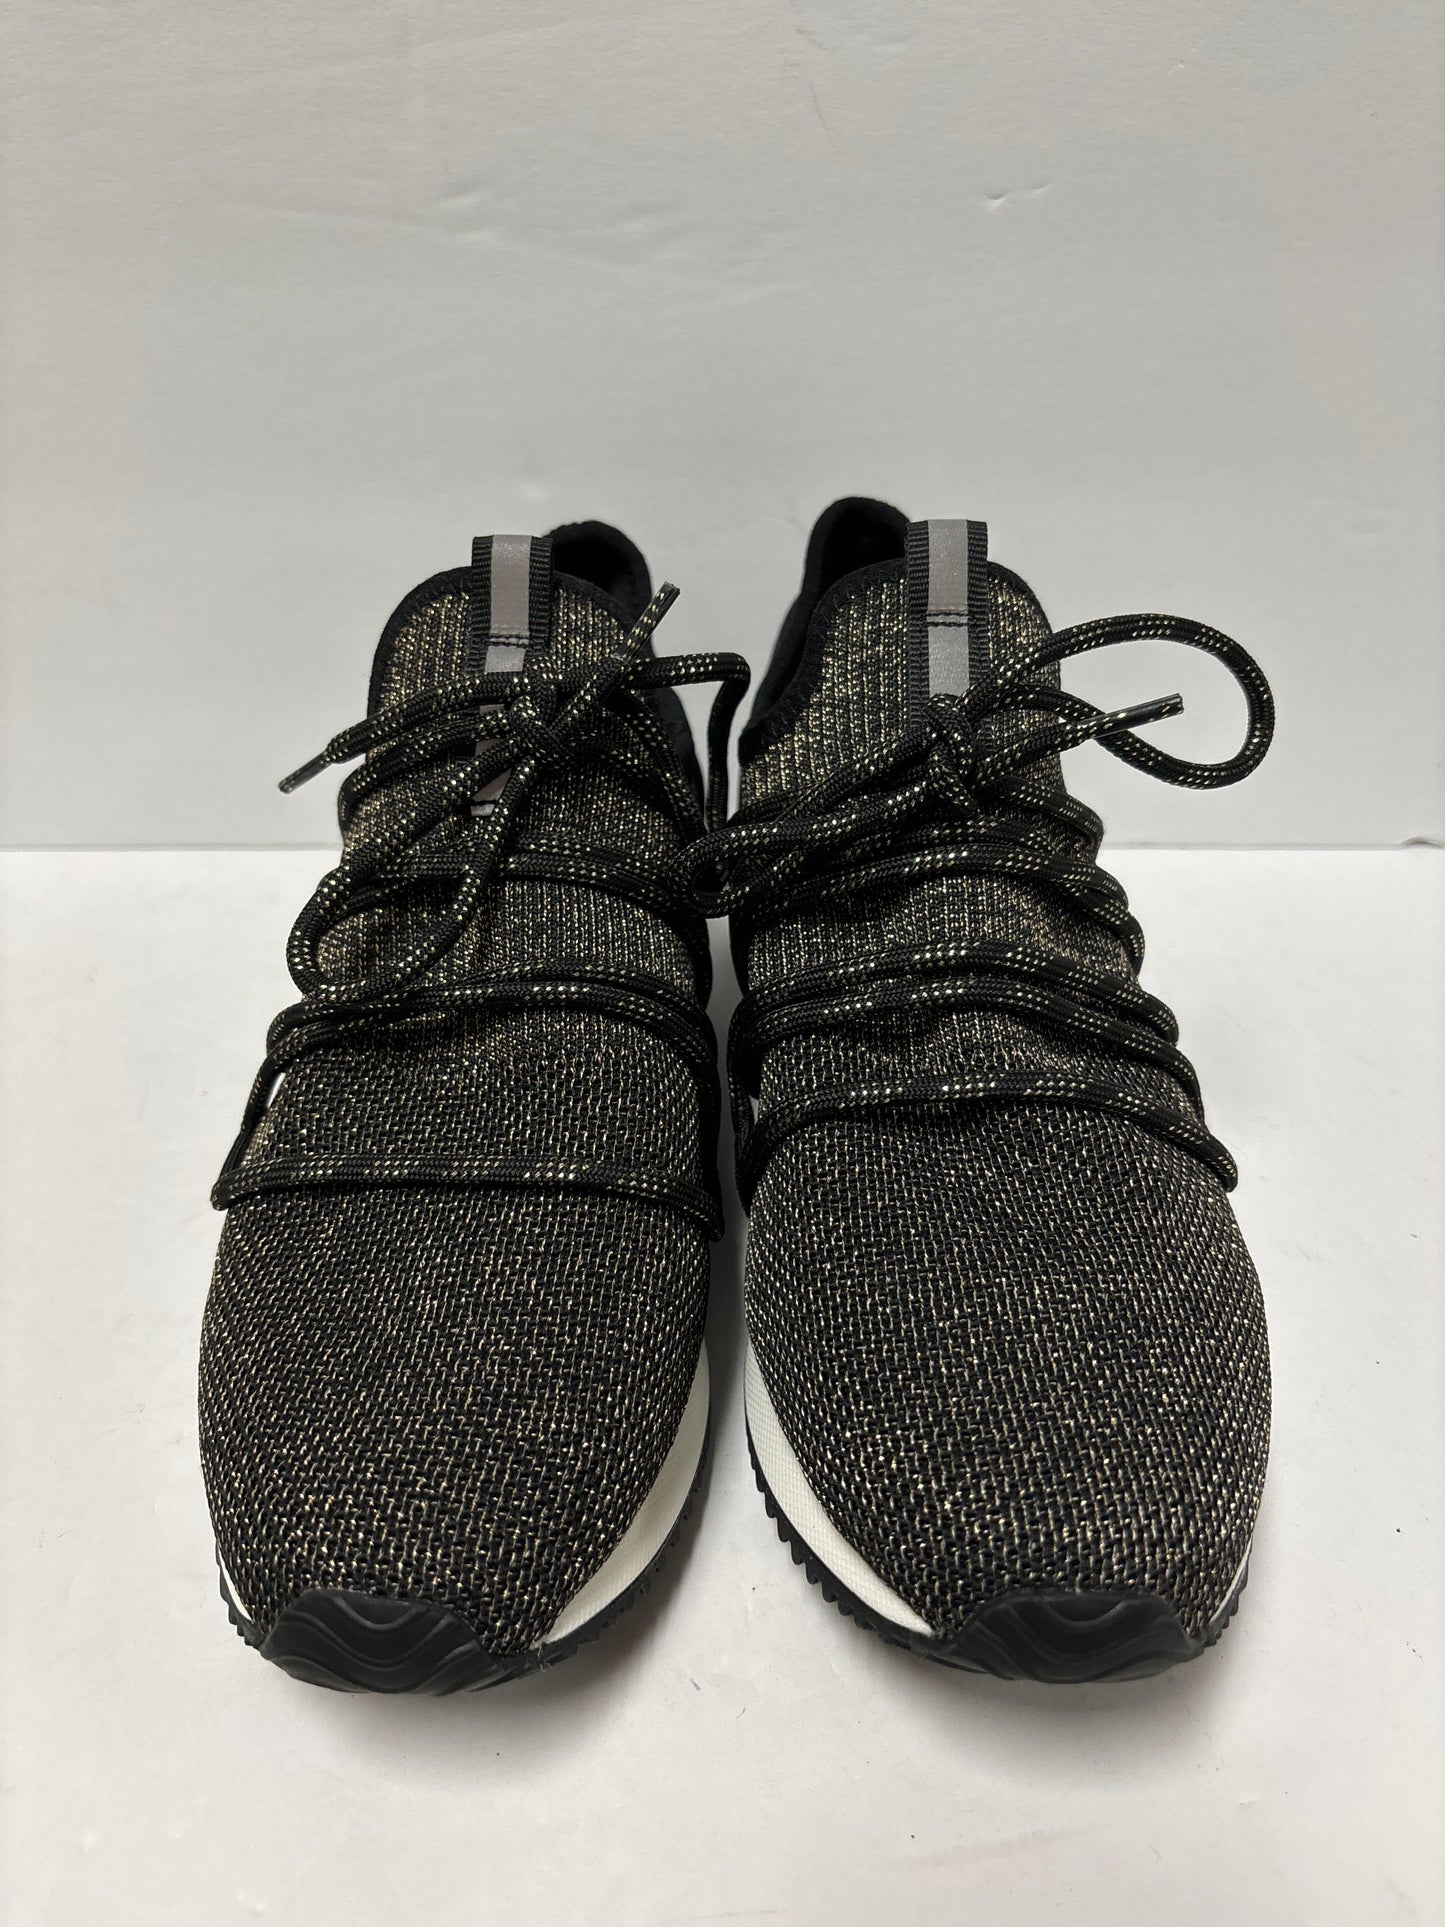 Black & Gold Shoes Sneakers J Slides, Size 7